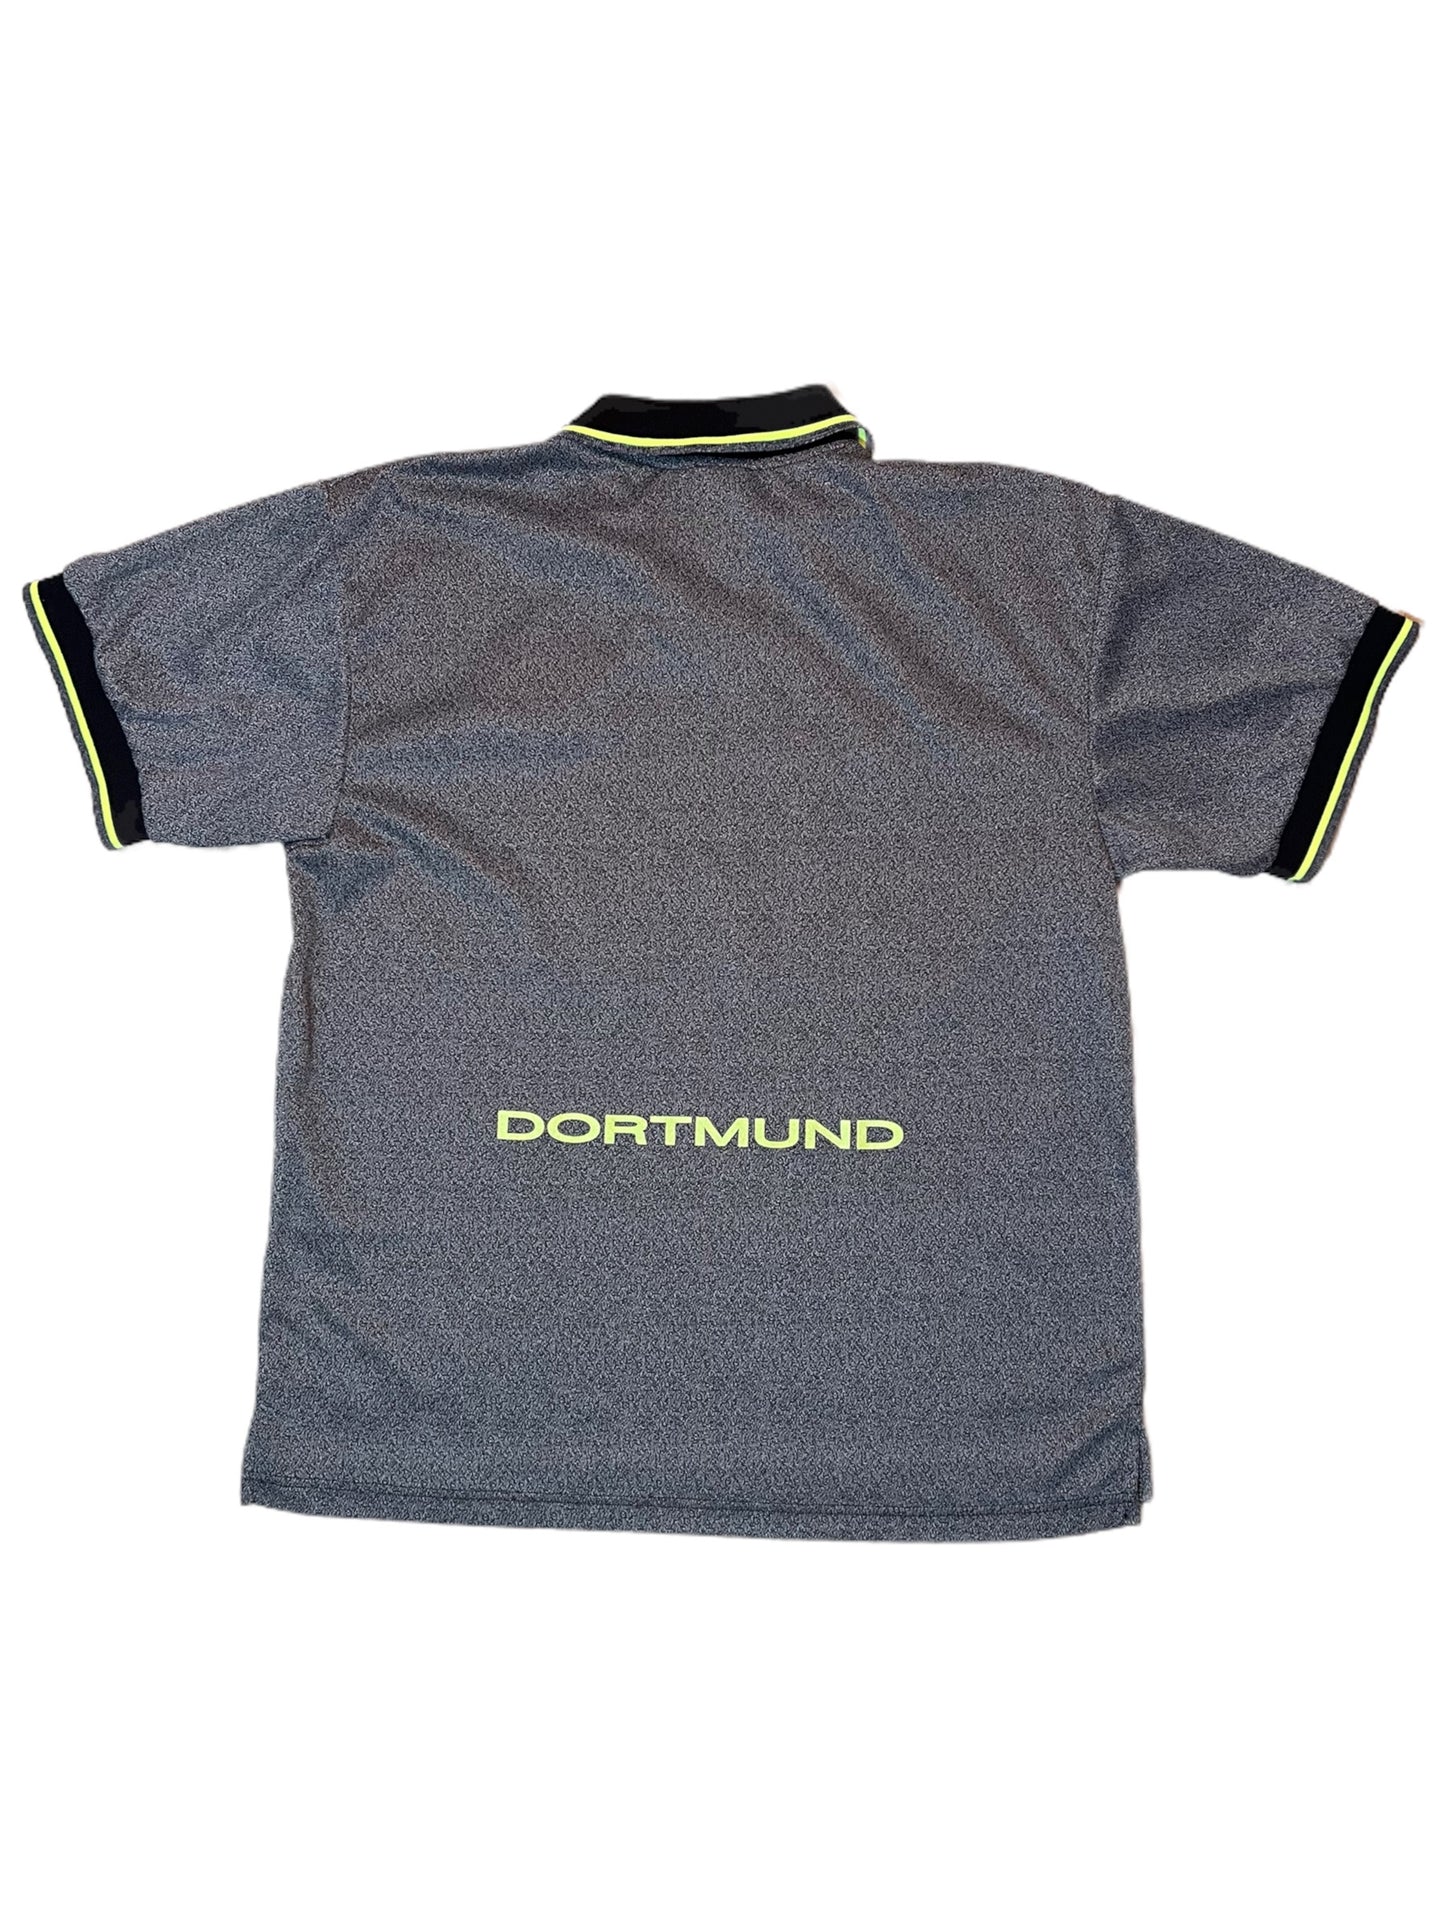 Vintage BVB Borussia Dortmund Nike 1997-1998 Away Football Shirt Grey Size L Made in UK S. Oliver